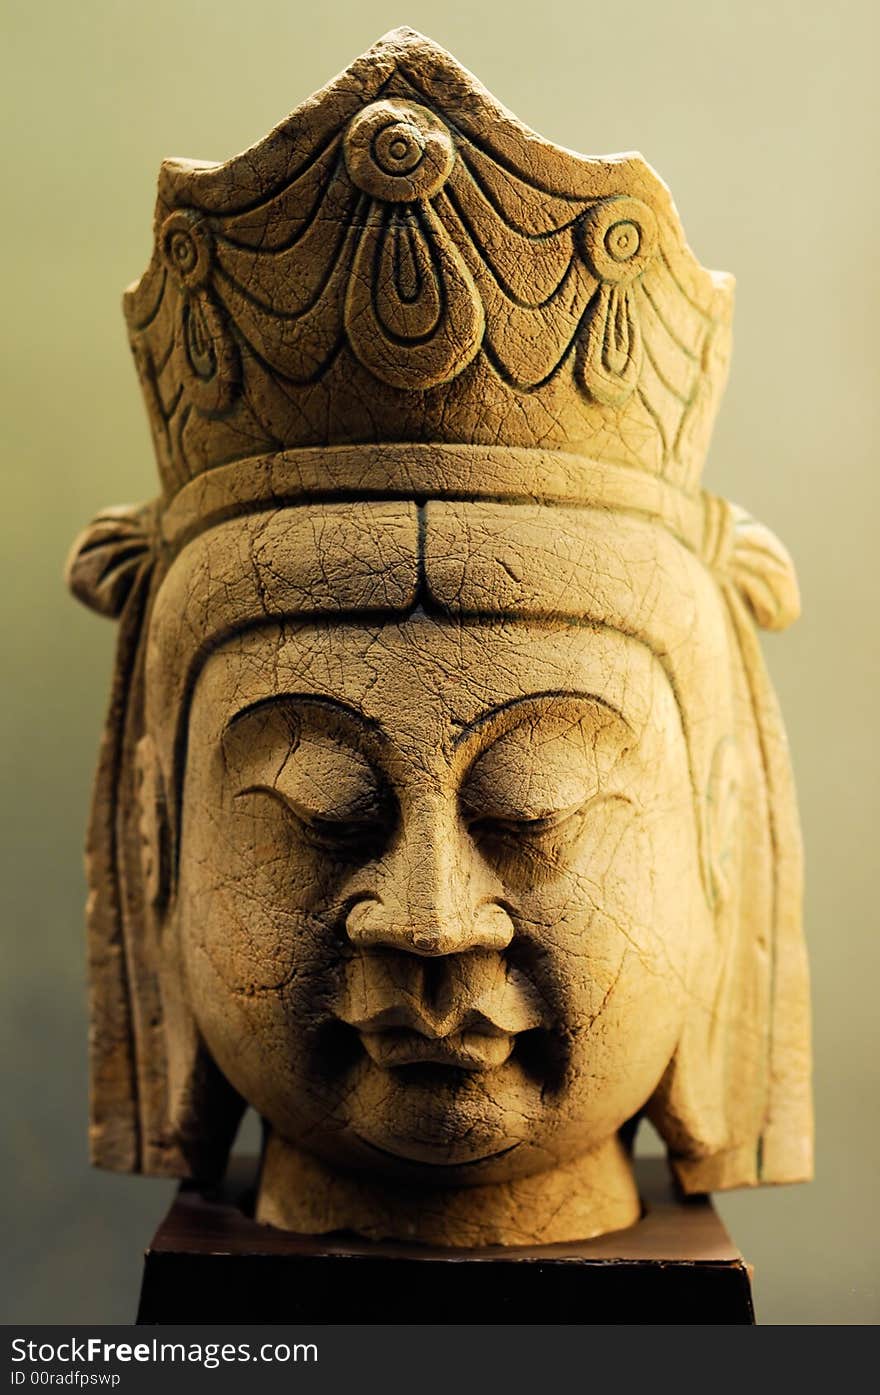 Bodhisattva statue made of stone